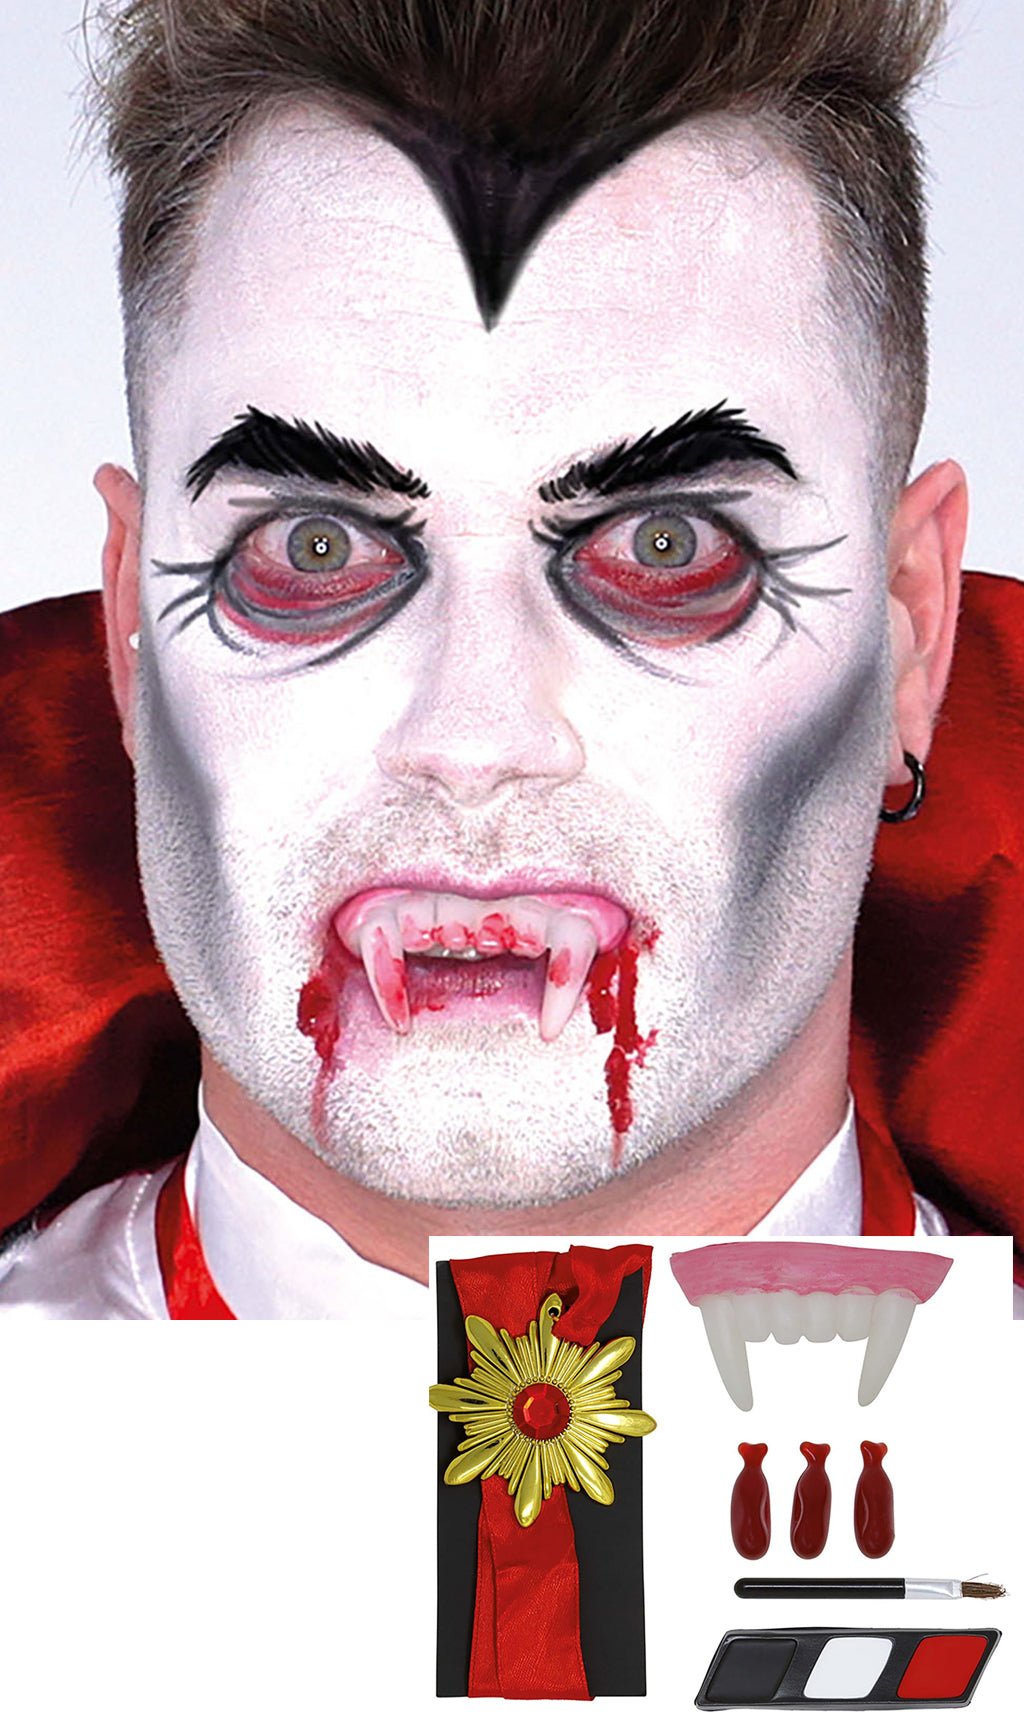 Dicas de maquiagem para vampiros masculinos - Halloween Makeup Techniques